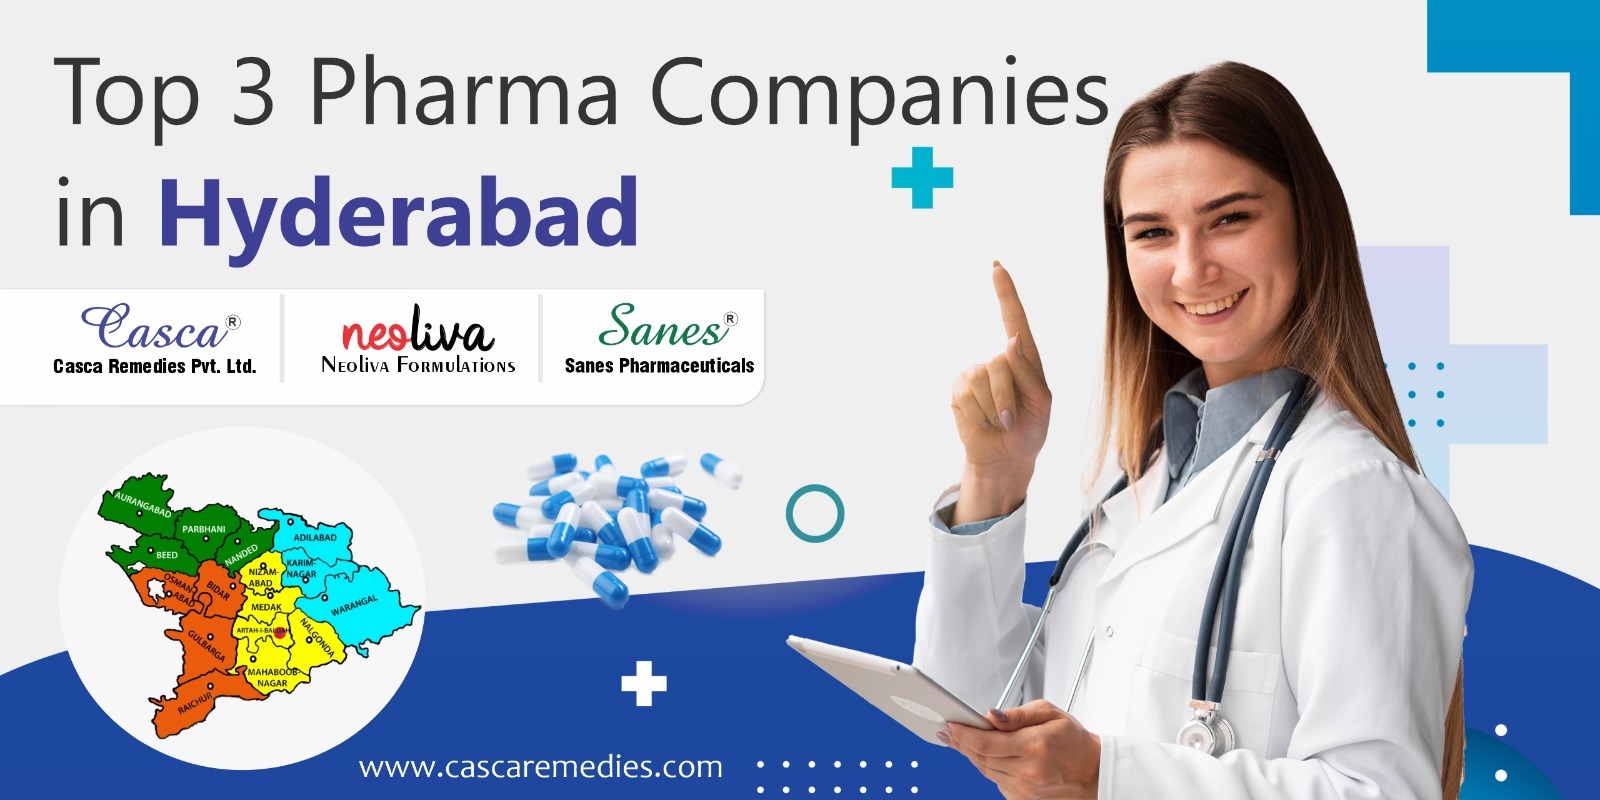 Top 3 Pharma Companies in Hyderabad Casca Remedies Pvt Ltd